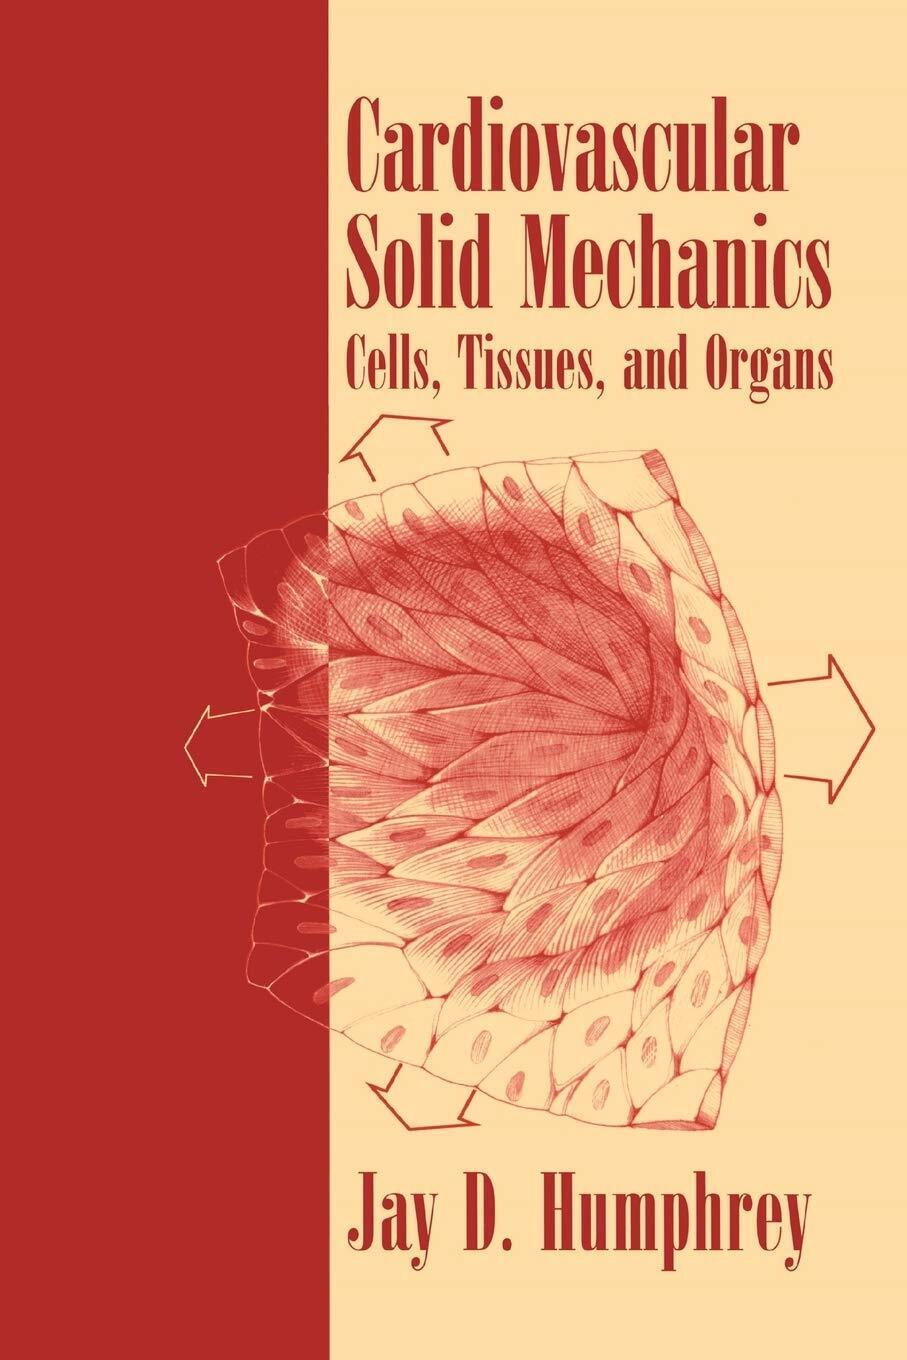 Cardiovascular Solid Mechanics - Jay D. Humphrey - Springer, 2010